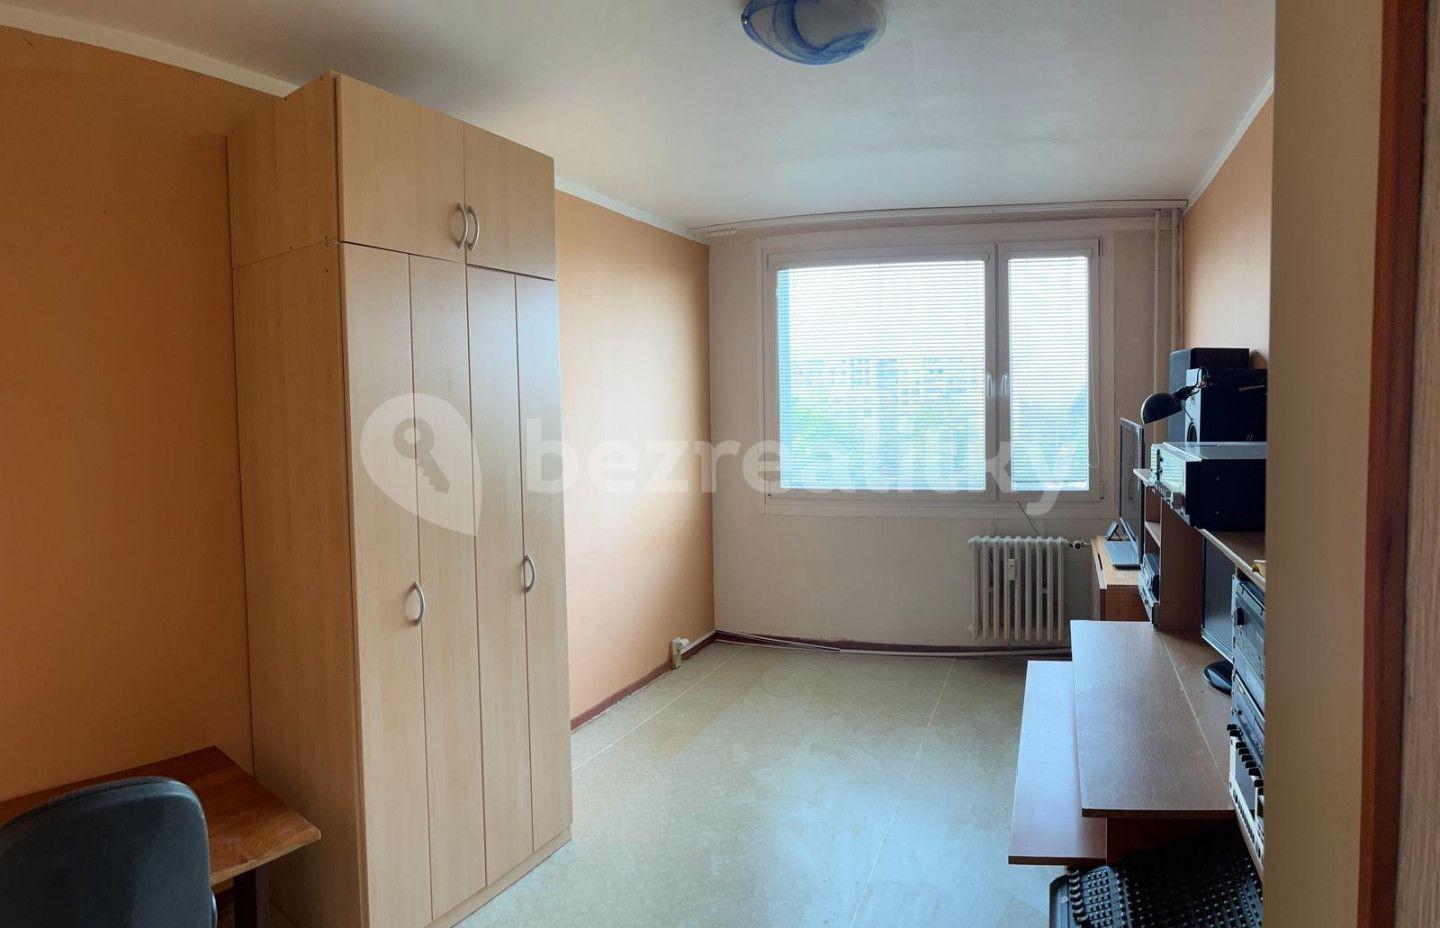 3 bedroom flat for sale, 70 m², Janouchova, Prague, Prague